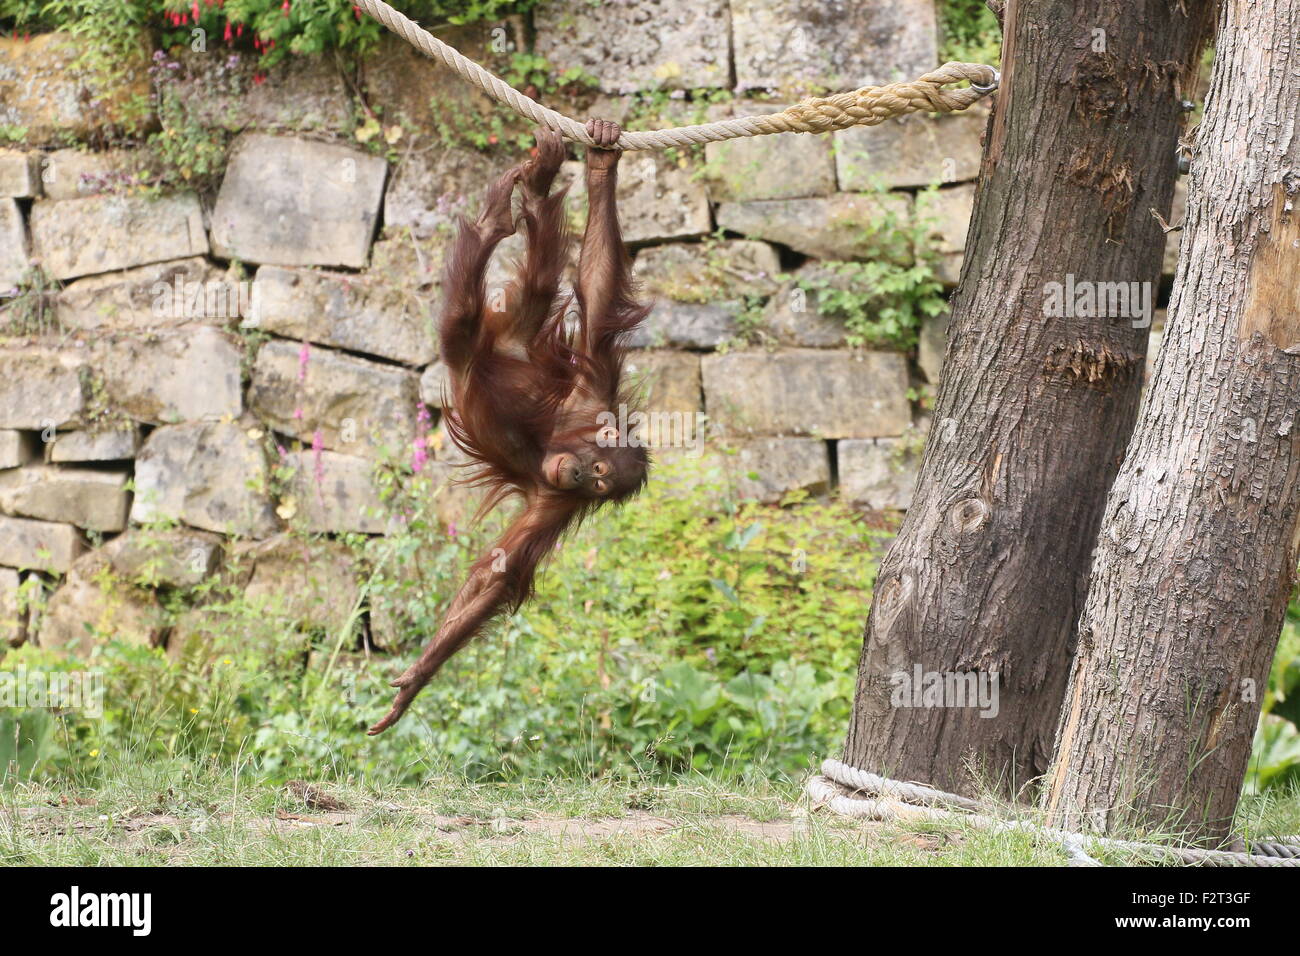 Male juvenile Bornean orangutan (Pongo pygmaeus) playing & hanging upside down on a rope (series of 10 images) Stock Photo